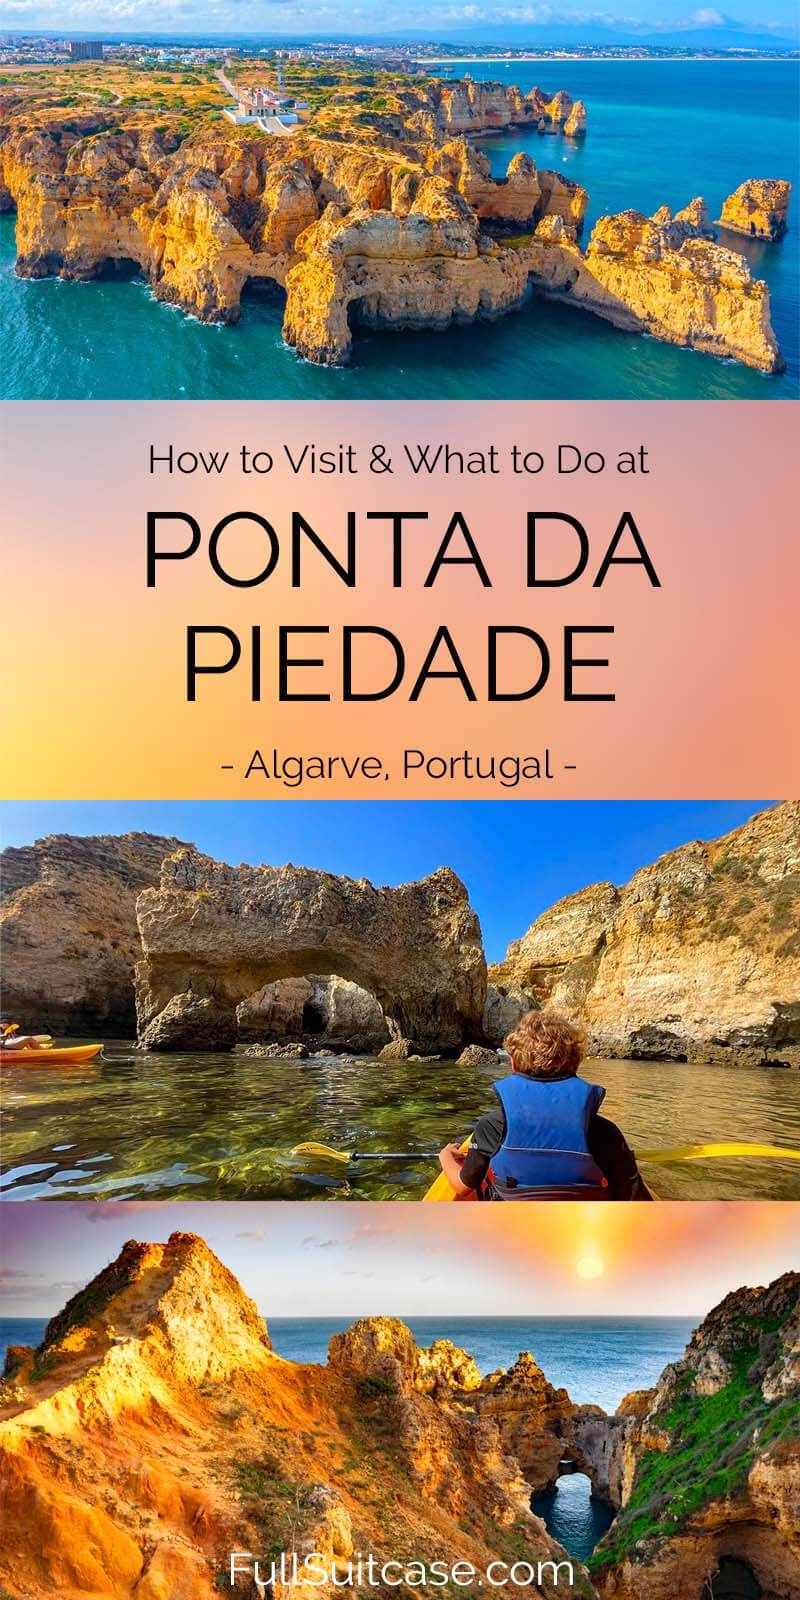 Complete guide to visiting Ponta da Piedade in Algarve Portugal